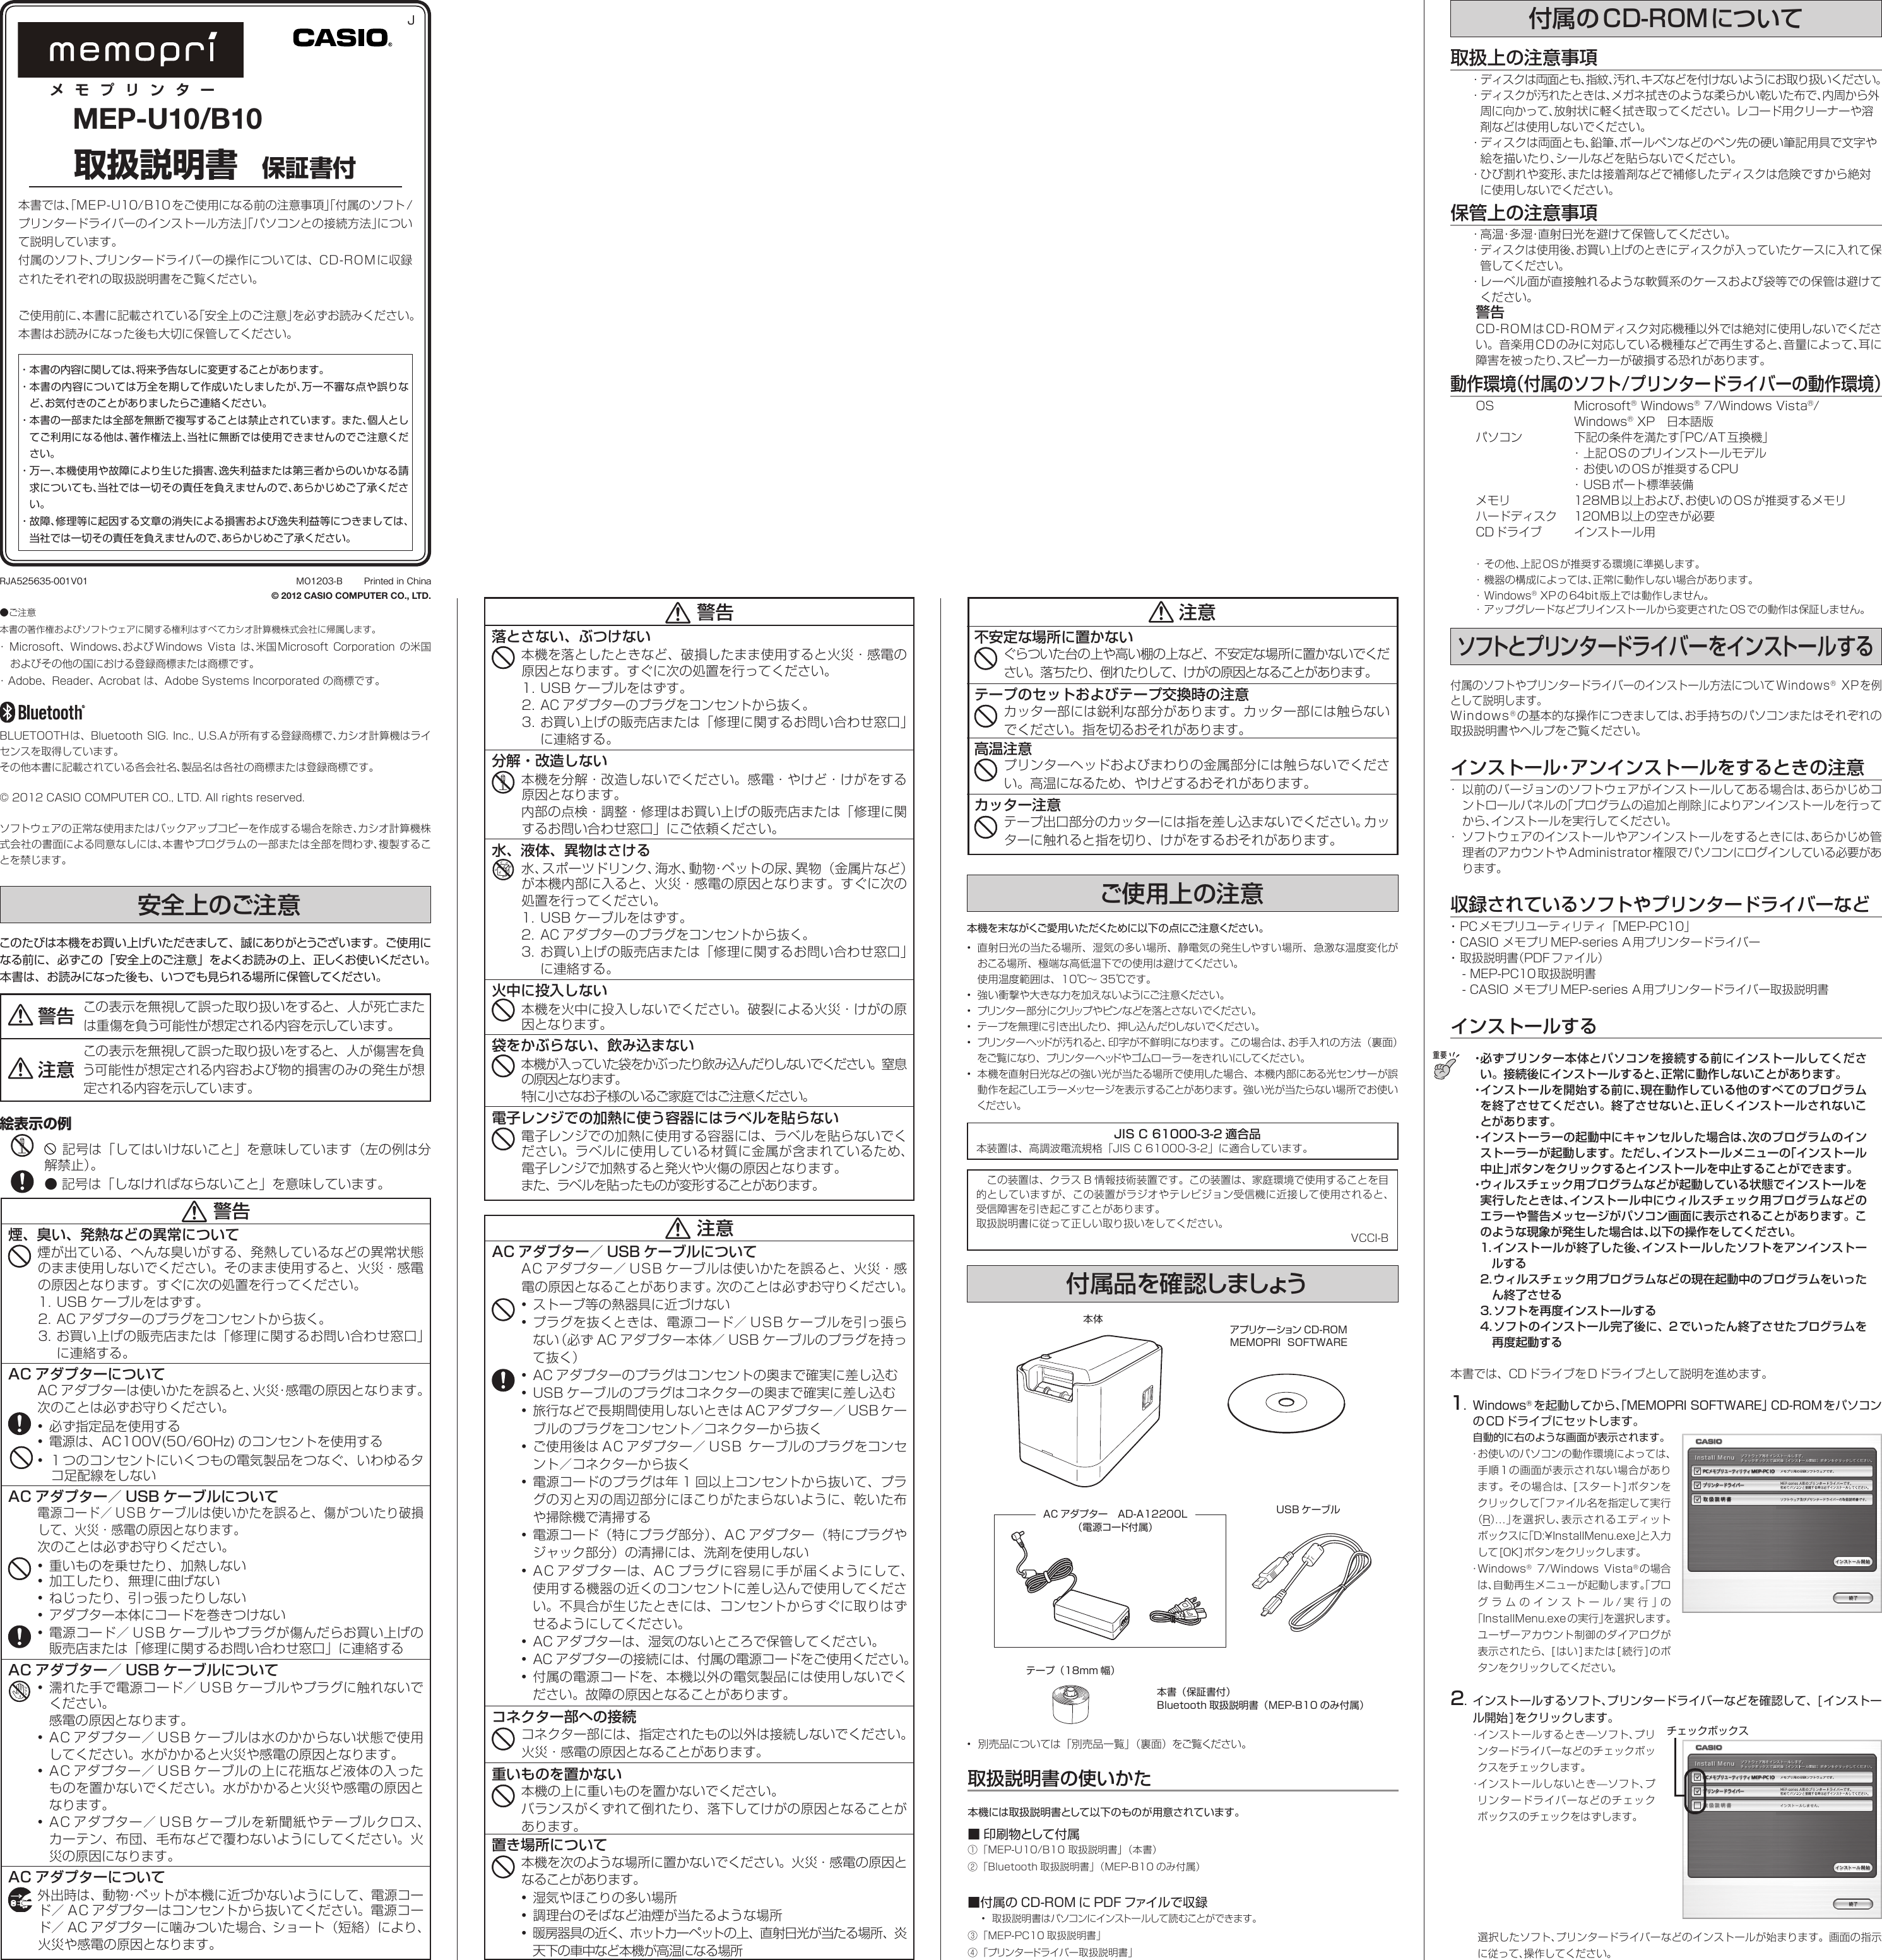 Page 1 of 4 - Casio MEP-U10_B10 MEP-B10 MEP-U10 B10